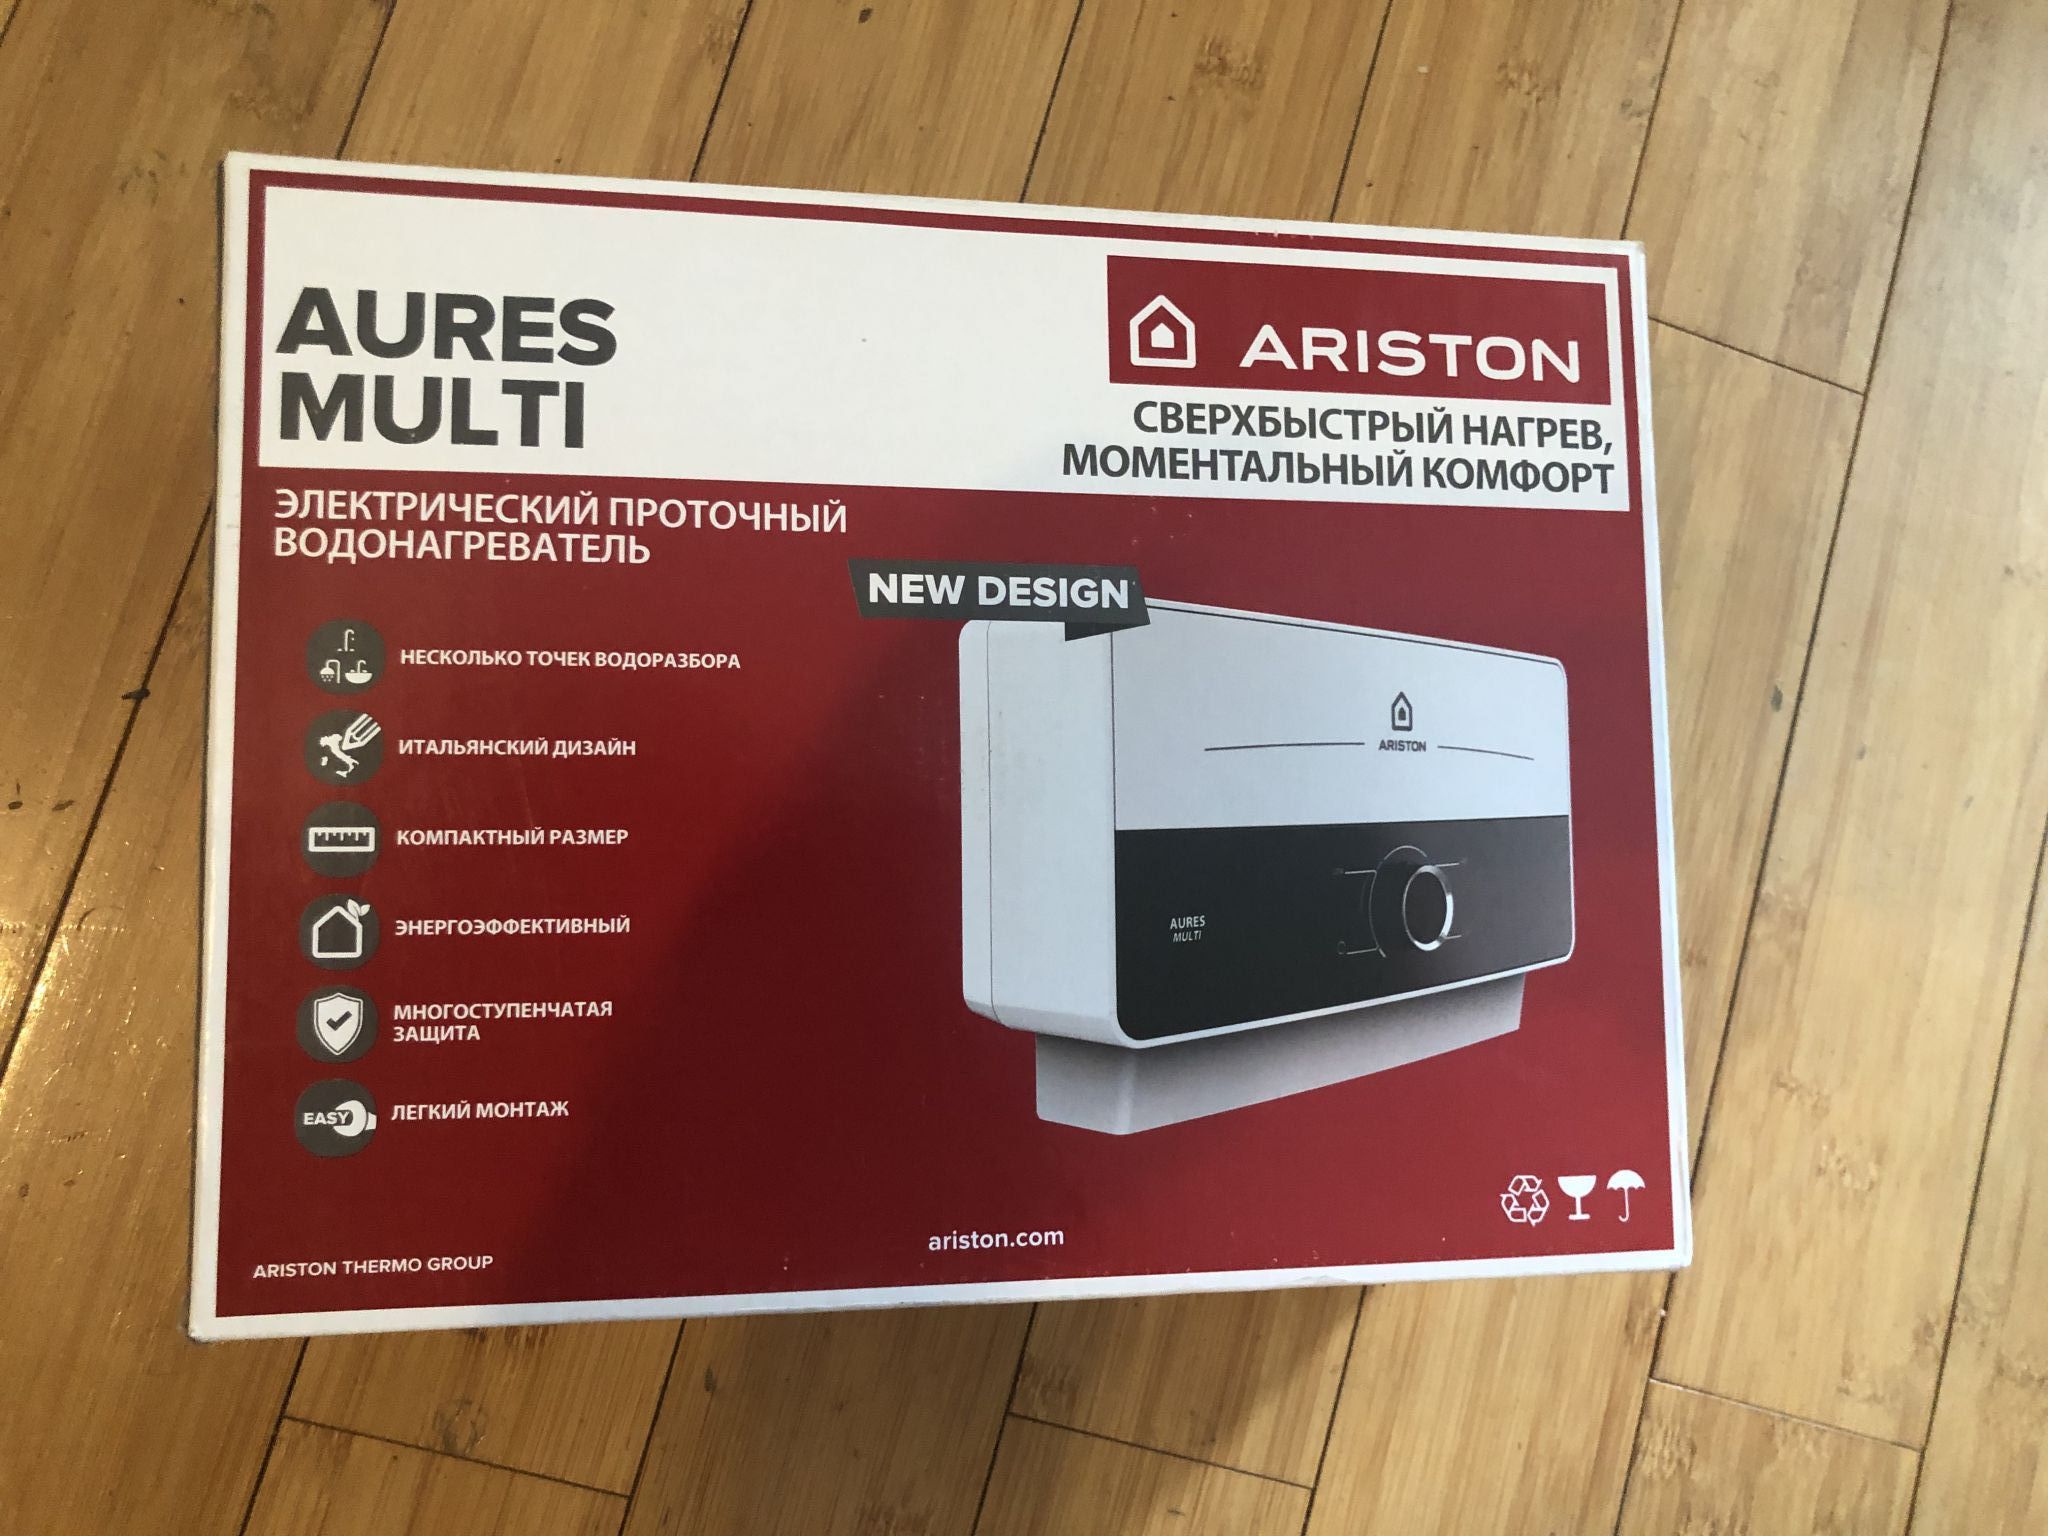 Ariston aures 7.7